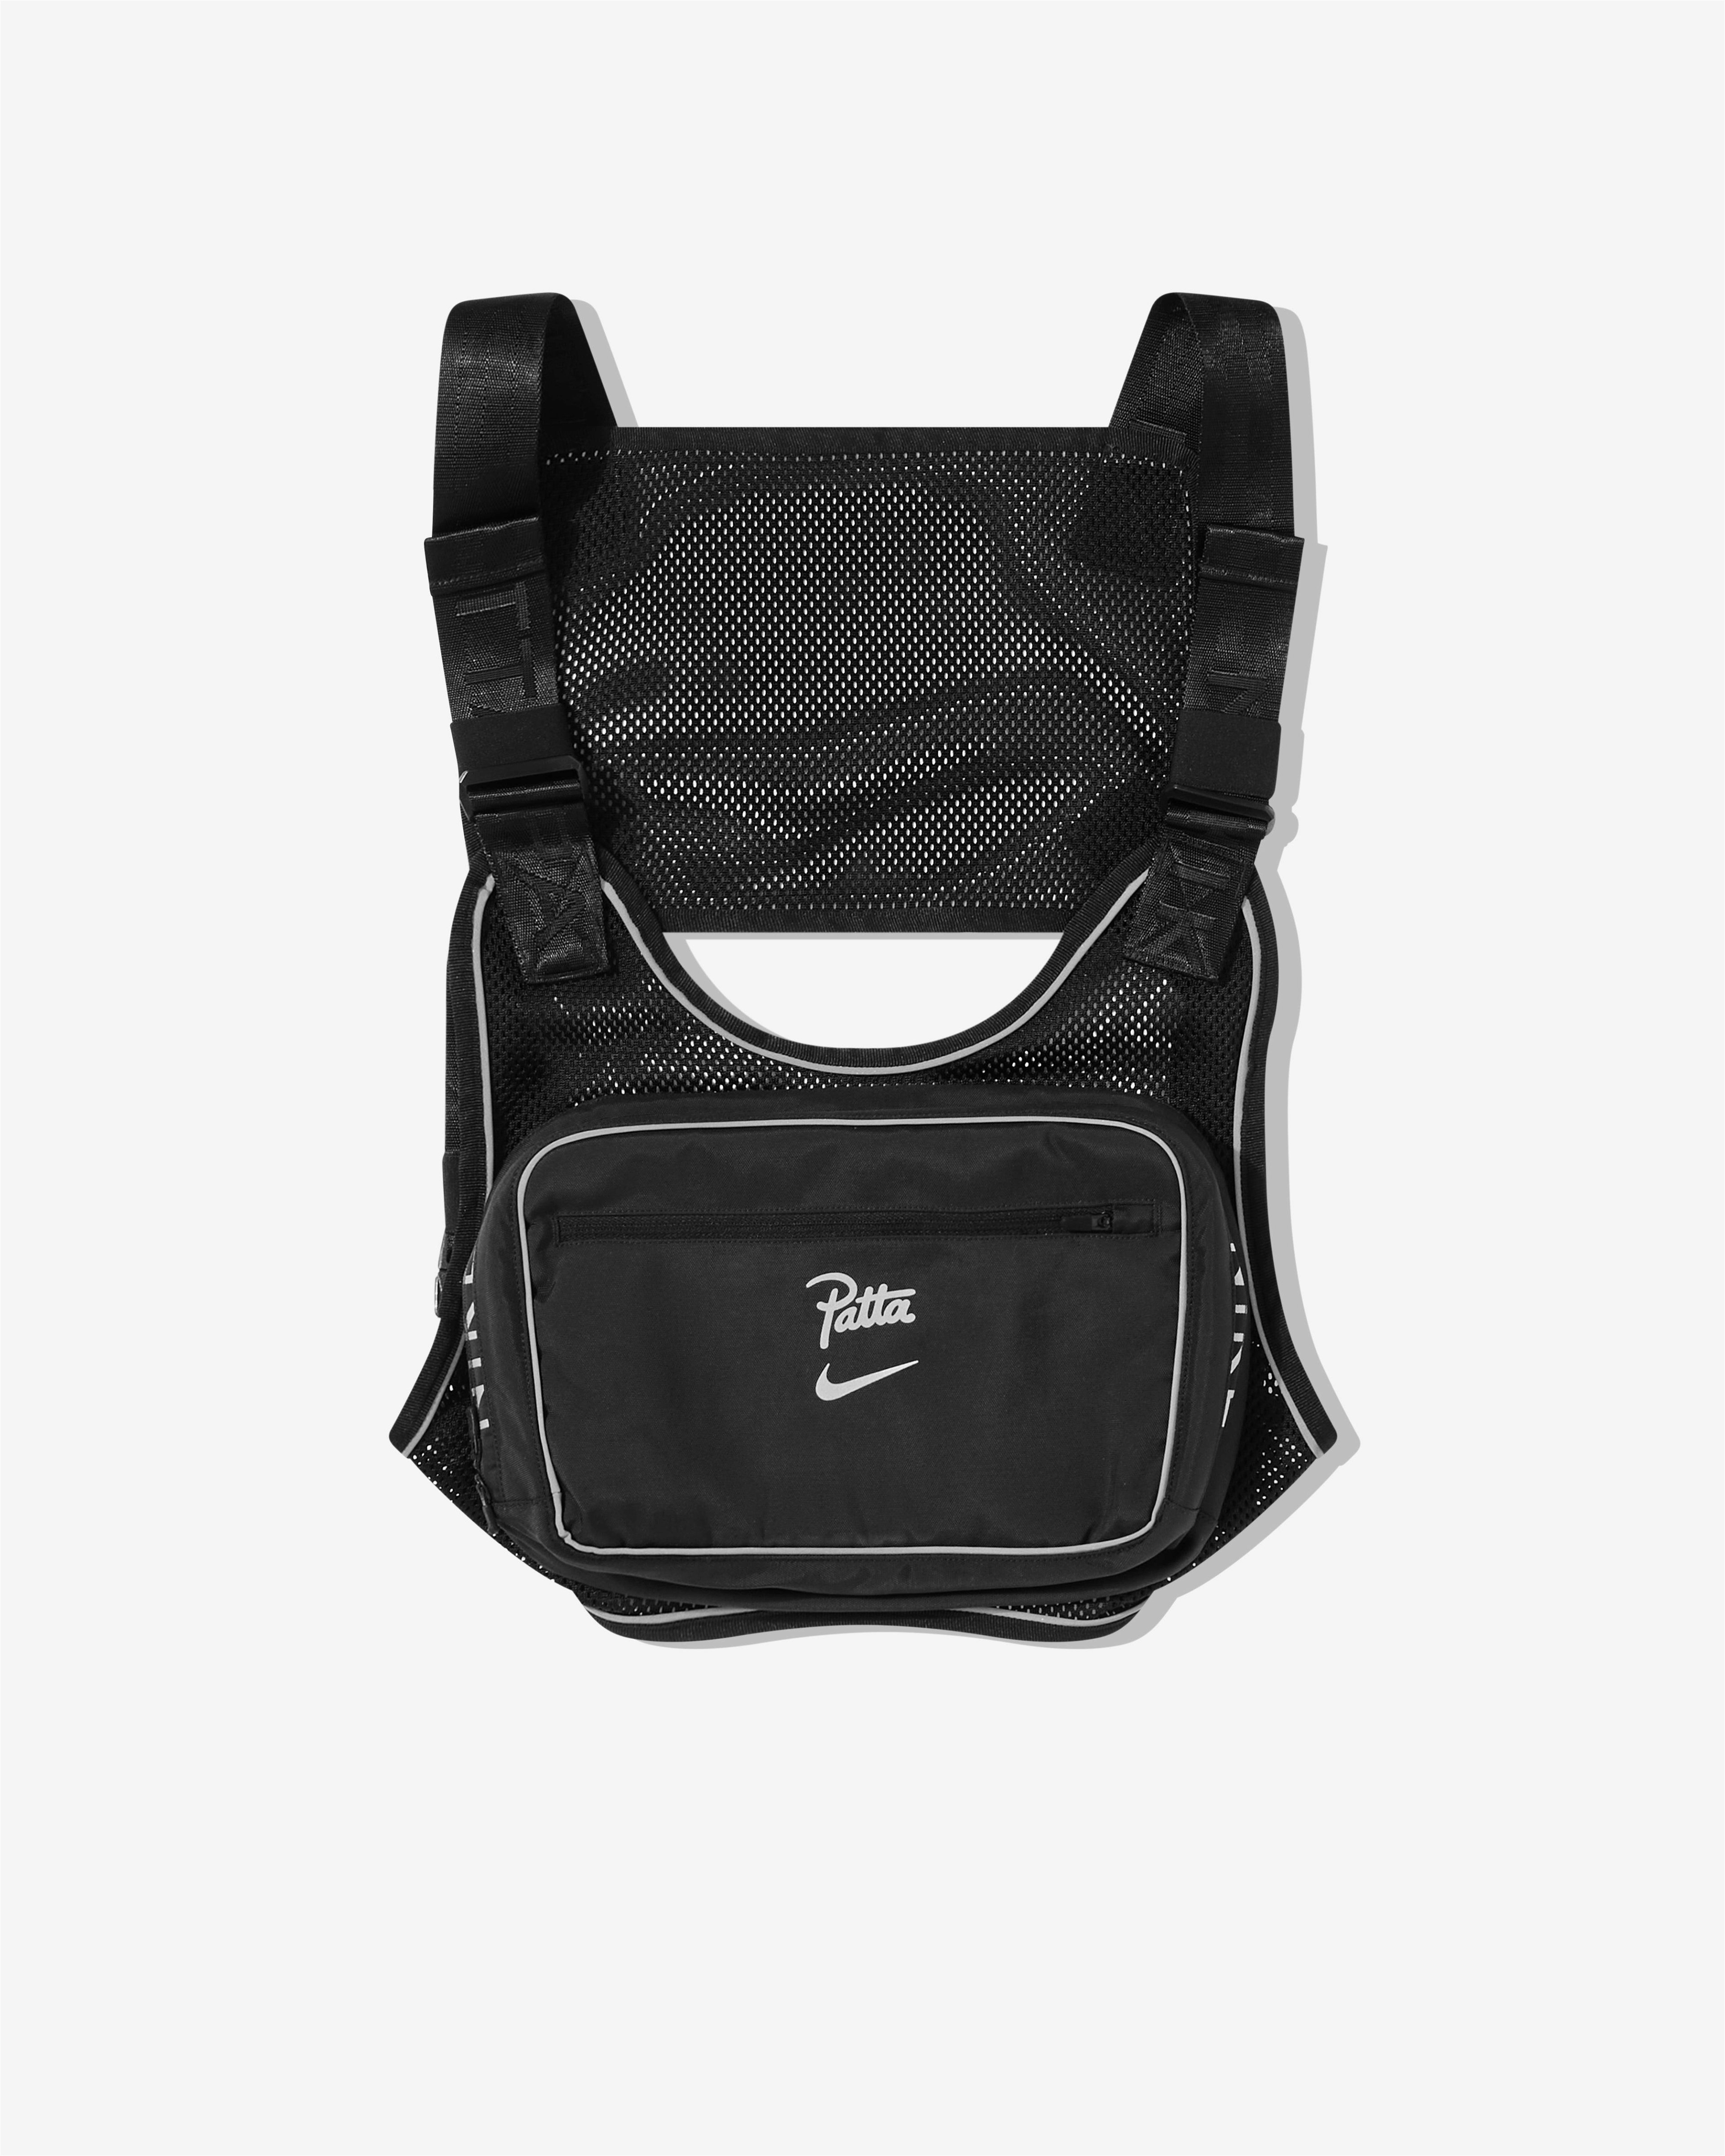 Nike - Patta Men's Running Rig Vest - (Black) by NIKE